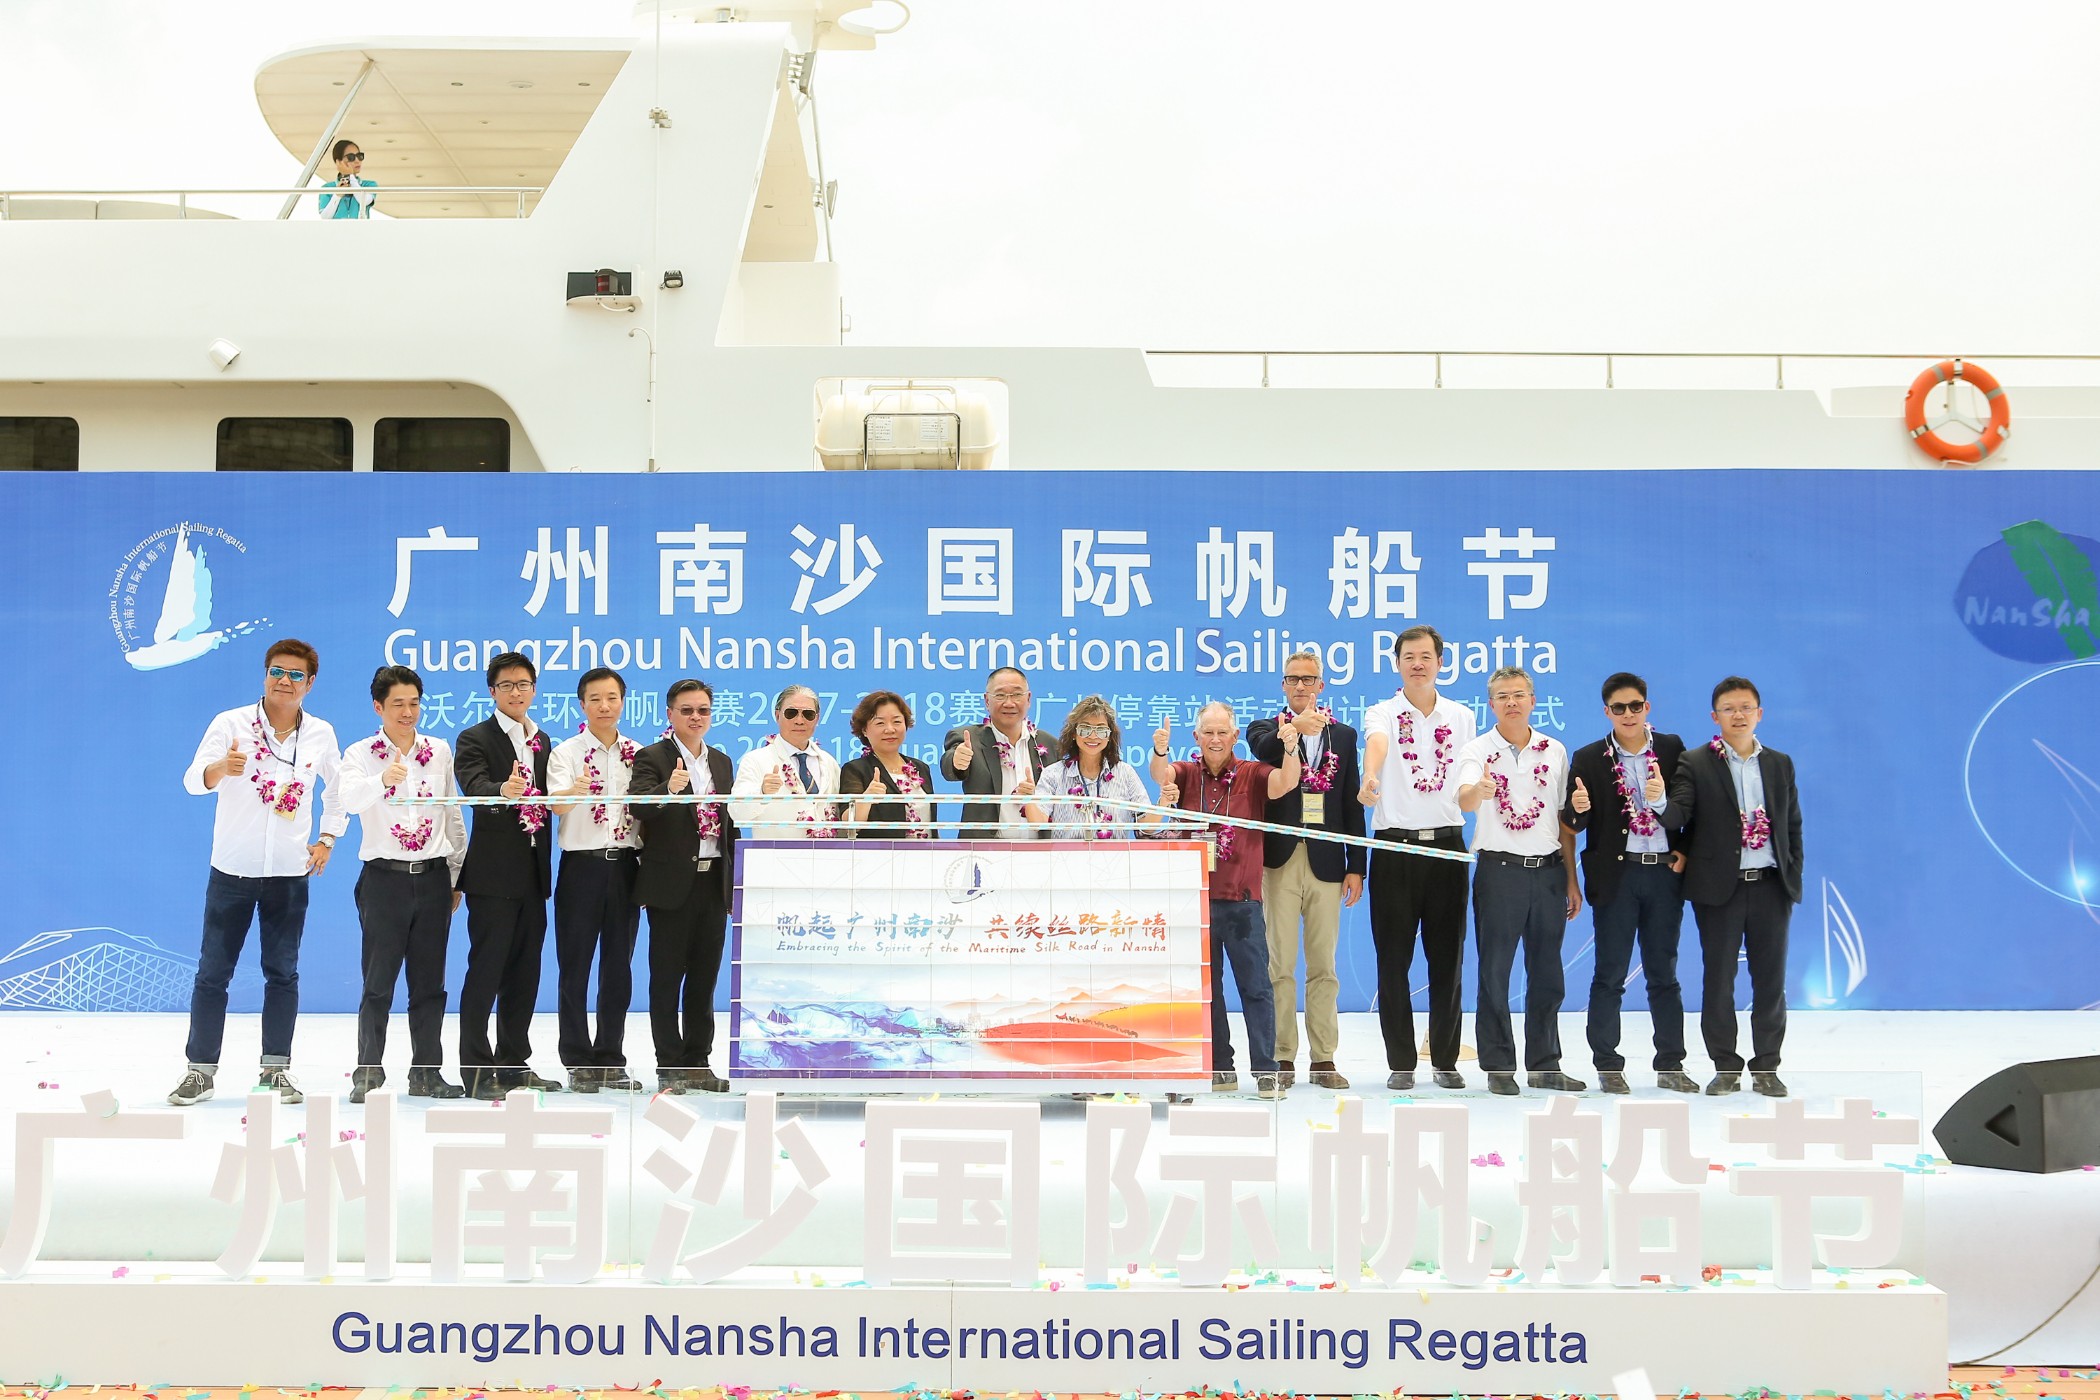 2017 The inaugural Guangzhou Nansha International Sailing Regatta